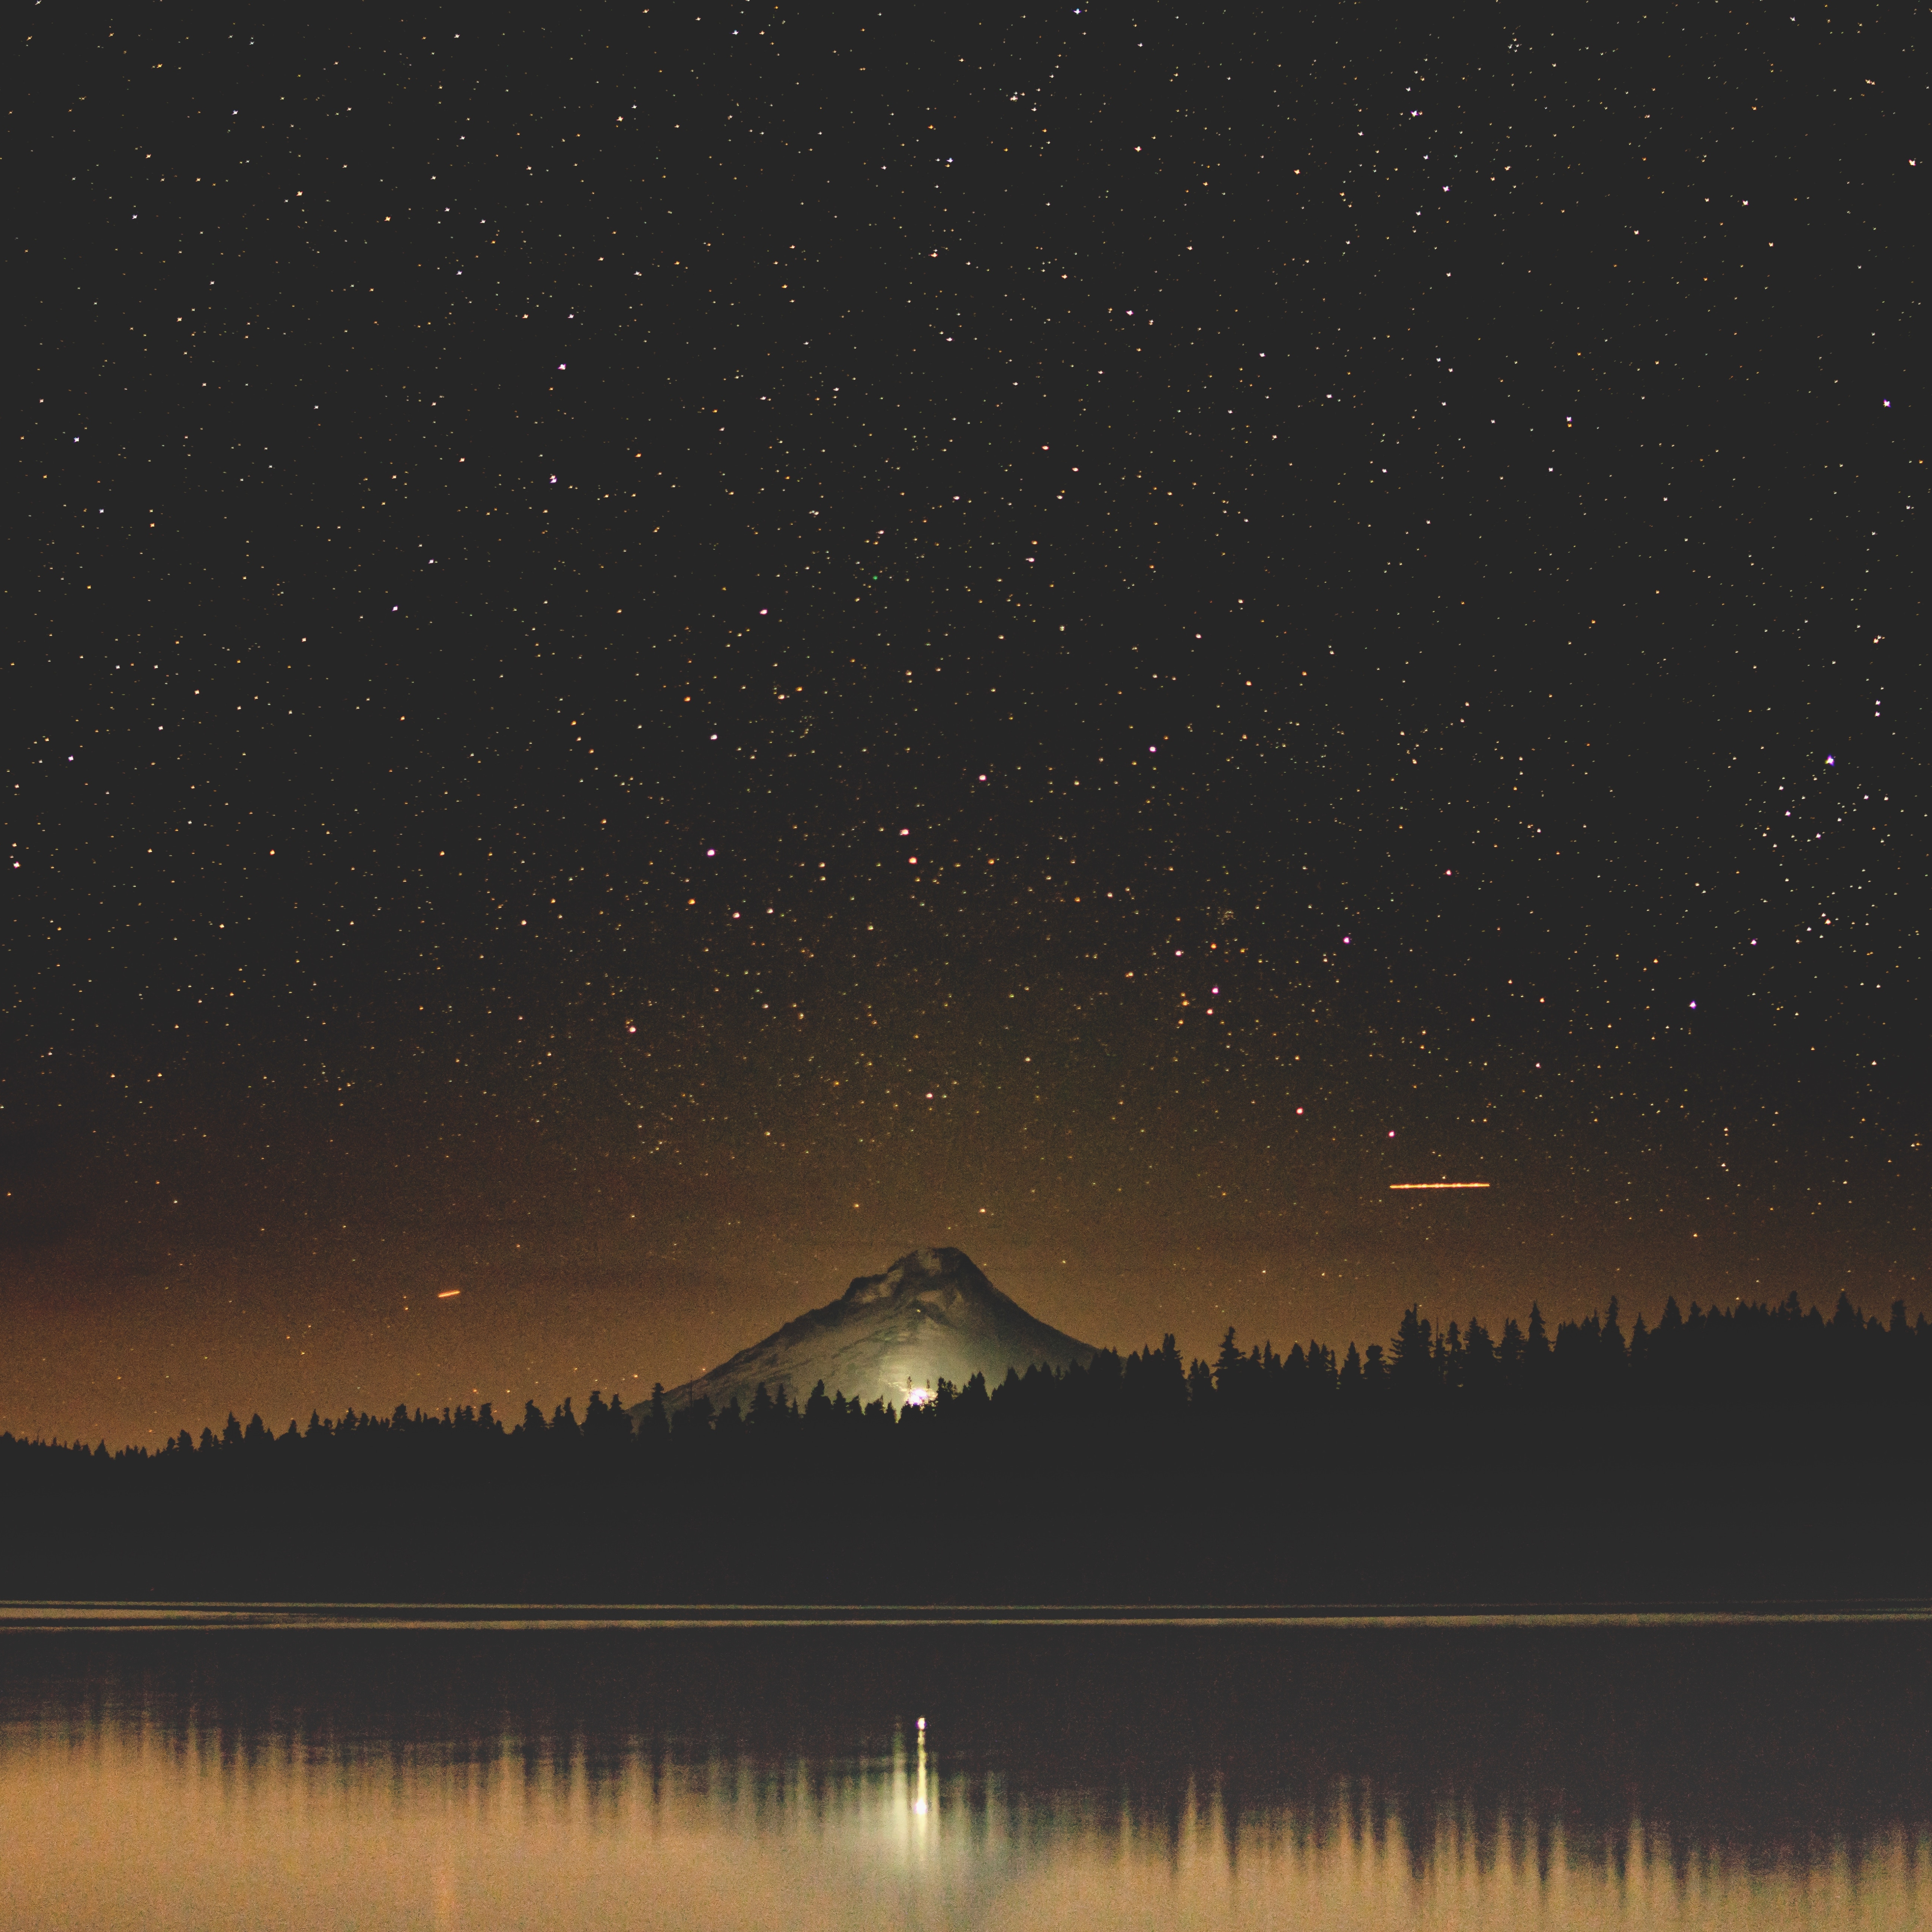 Whole night. Звездное озеро. Звездное небо горы озеро. Обои ночное озеро на андроид. Точка в чёрном небе над озером.